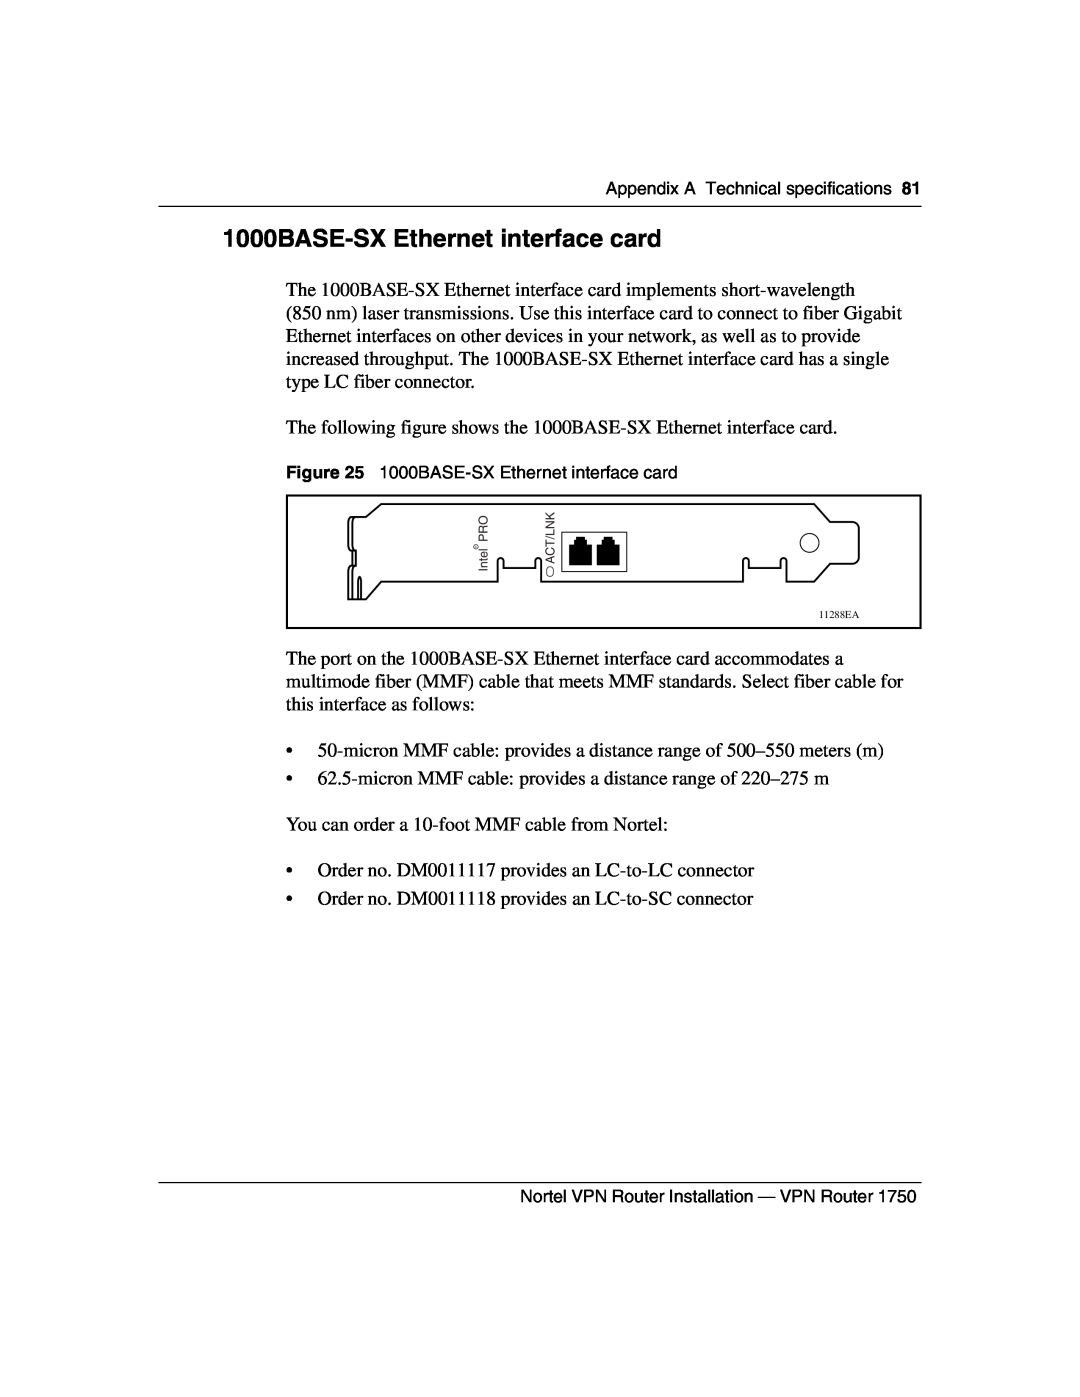 Nortel Networks 1750 manual 1000BASE-SX Ethernet interface card 